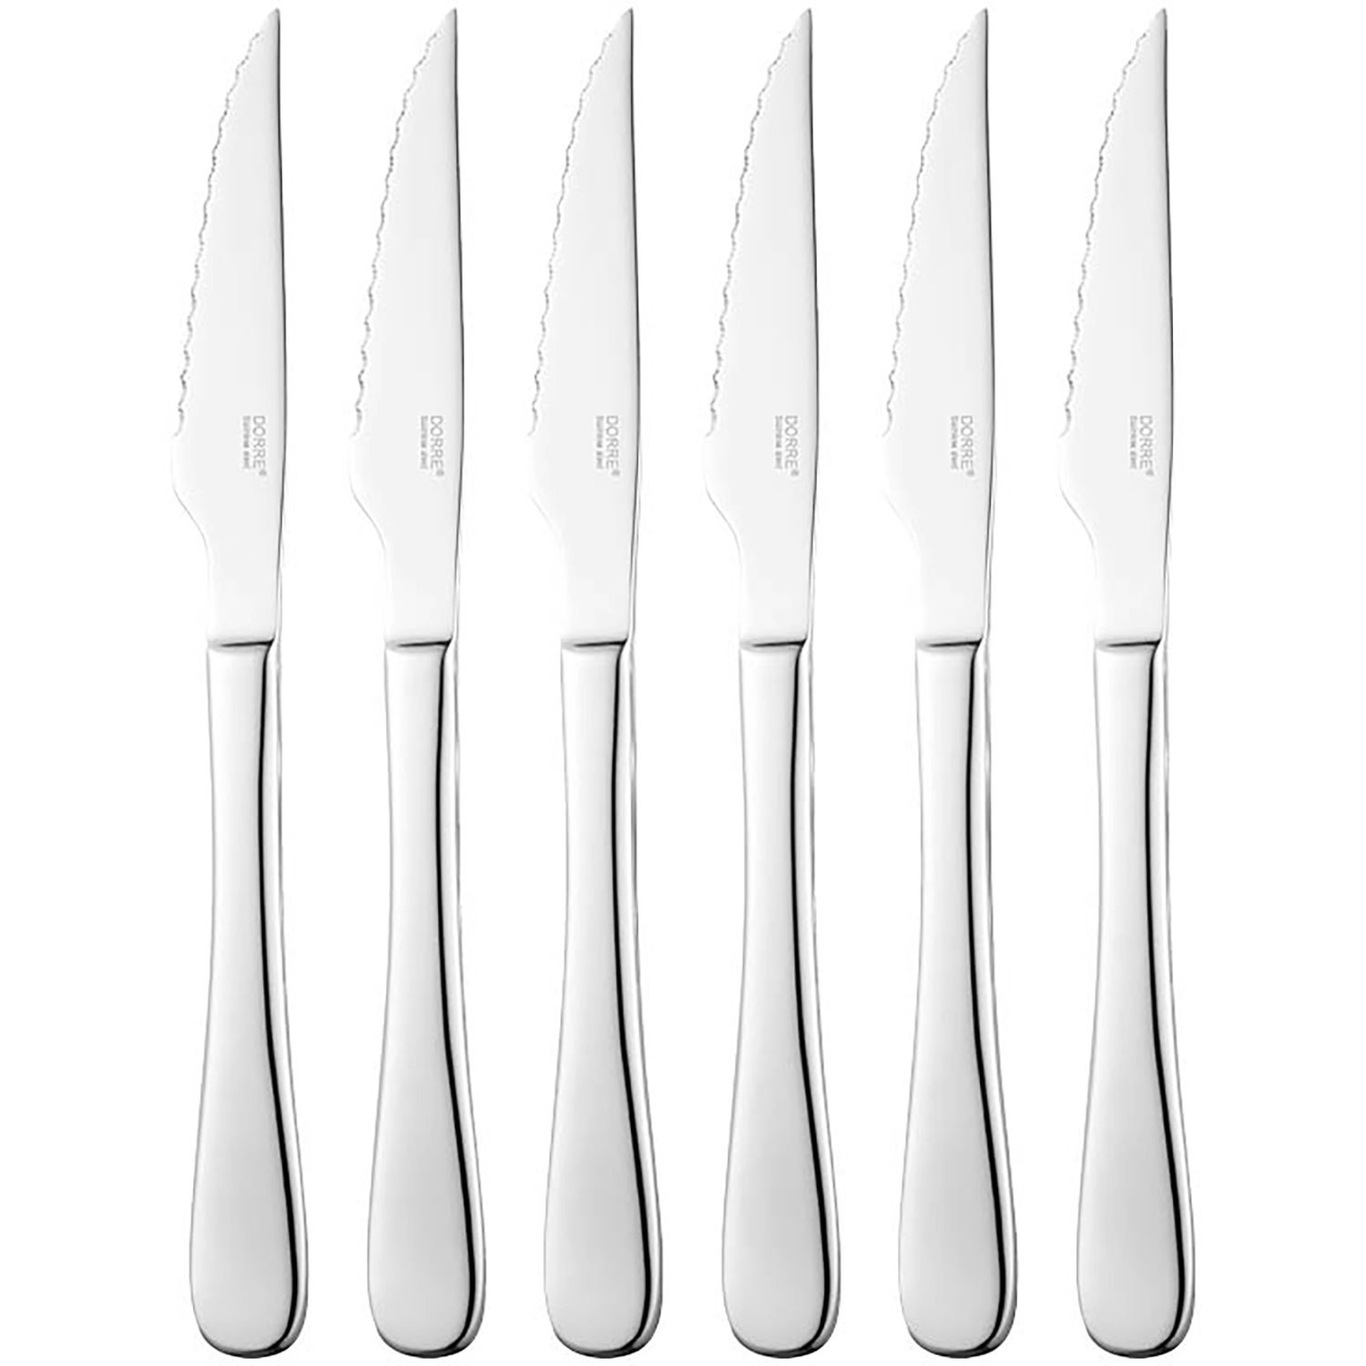 https://royaldesign.com/image/2/dorre-classic-steak-knives-6-pack-0?w=800&quality=80